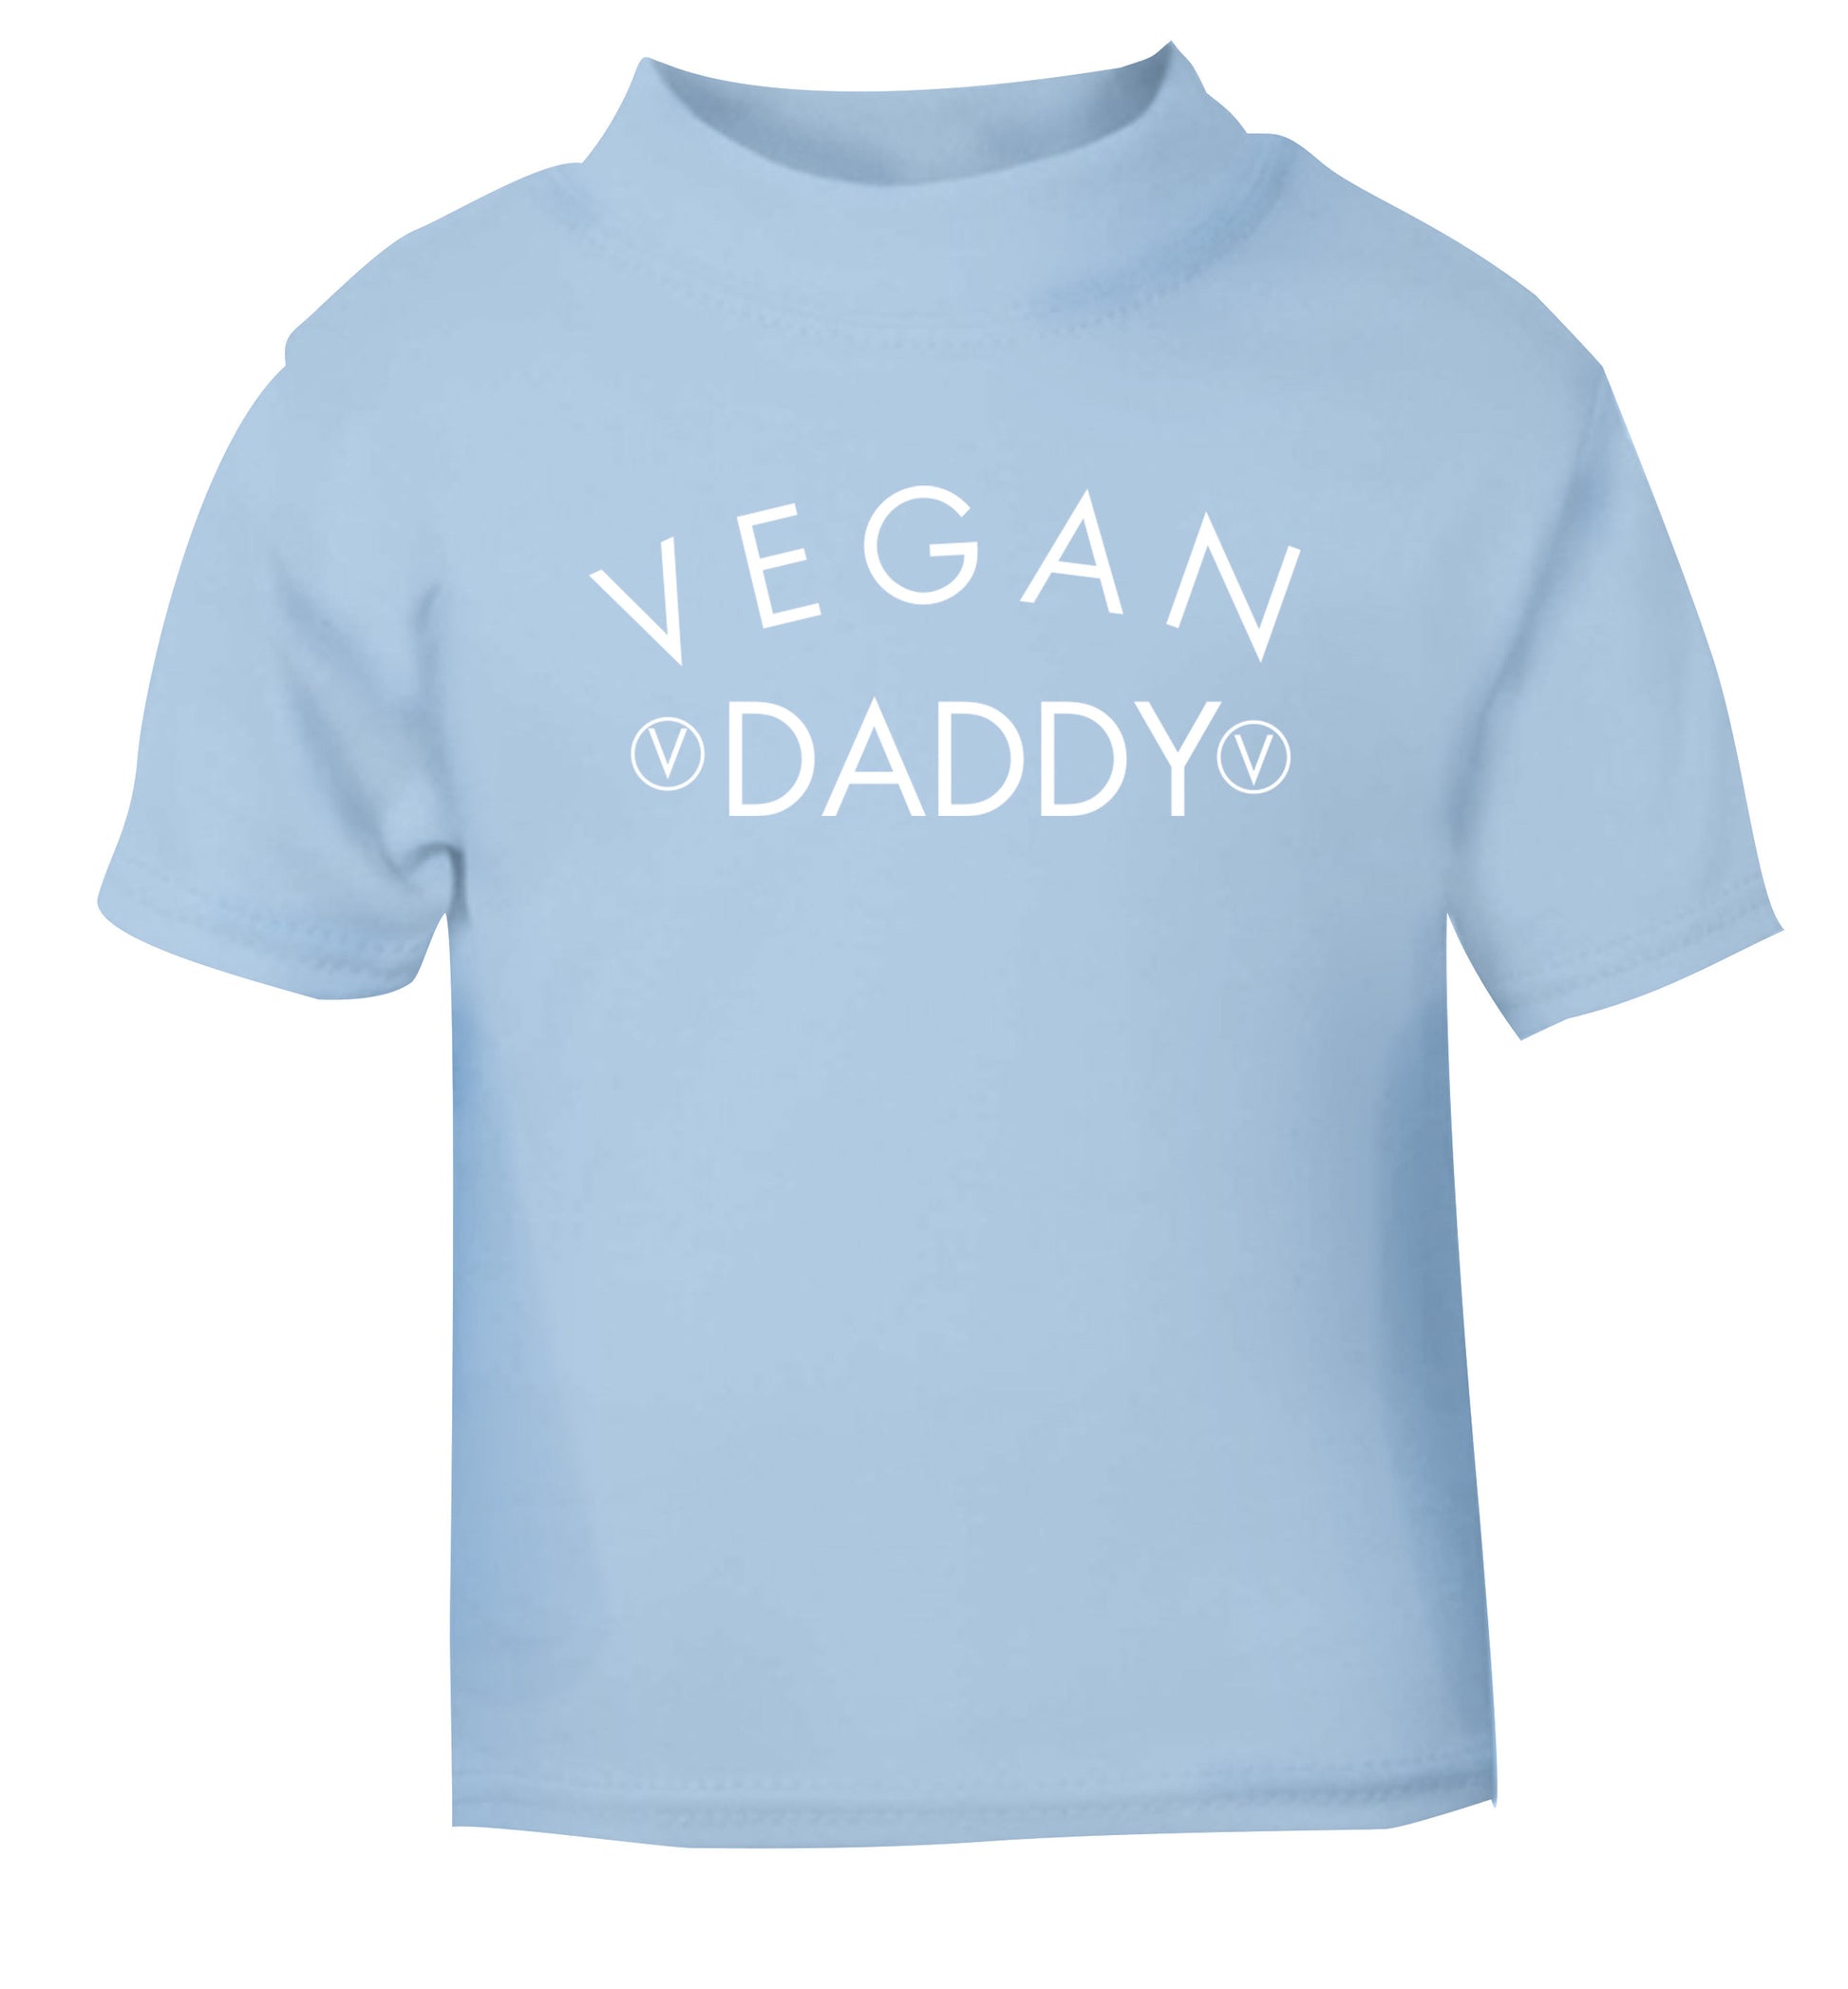 Vegan daddy light blue Baby Toddler Tshirt 2 Years